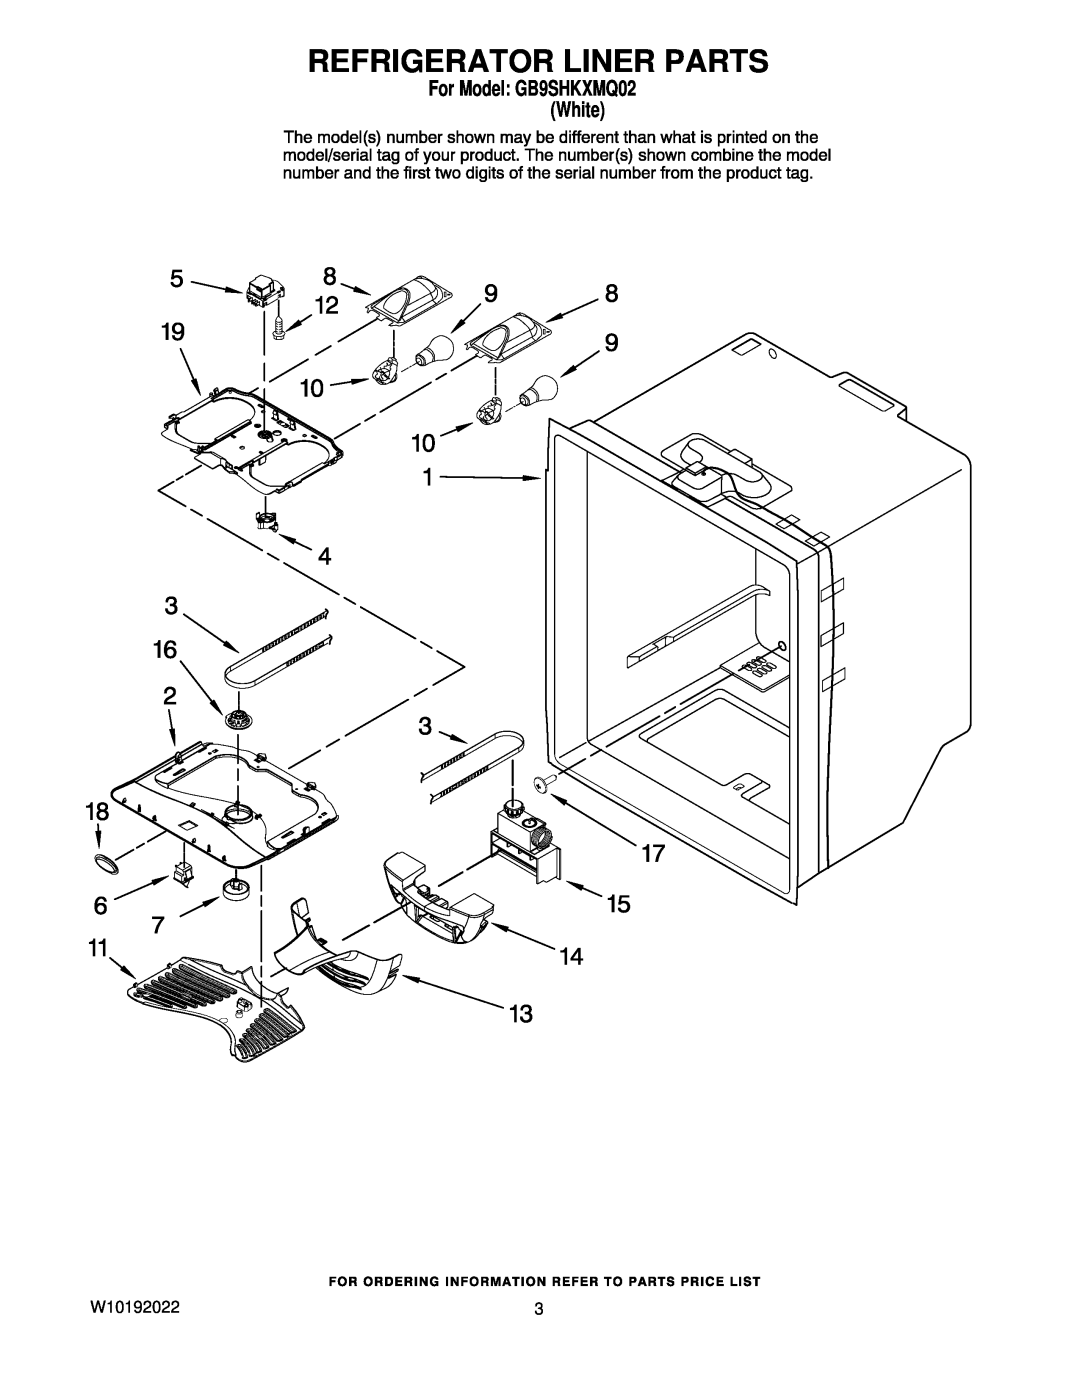 Whirlpool manual Refrigerator Liner Parts, W10192022, For Model GB9SHKXMQ02 White 